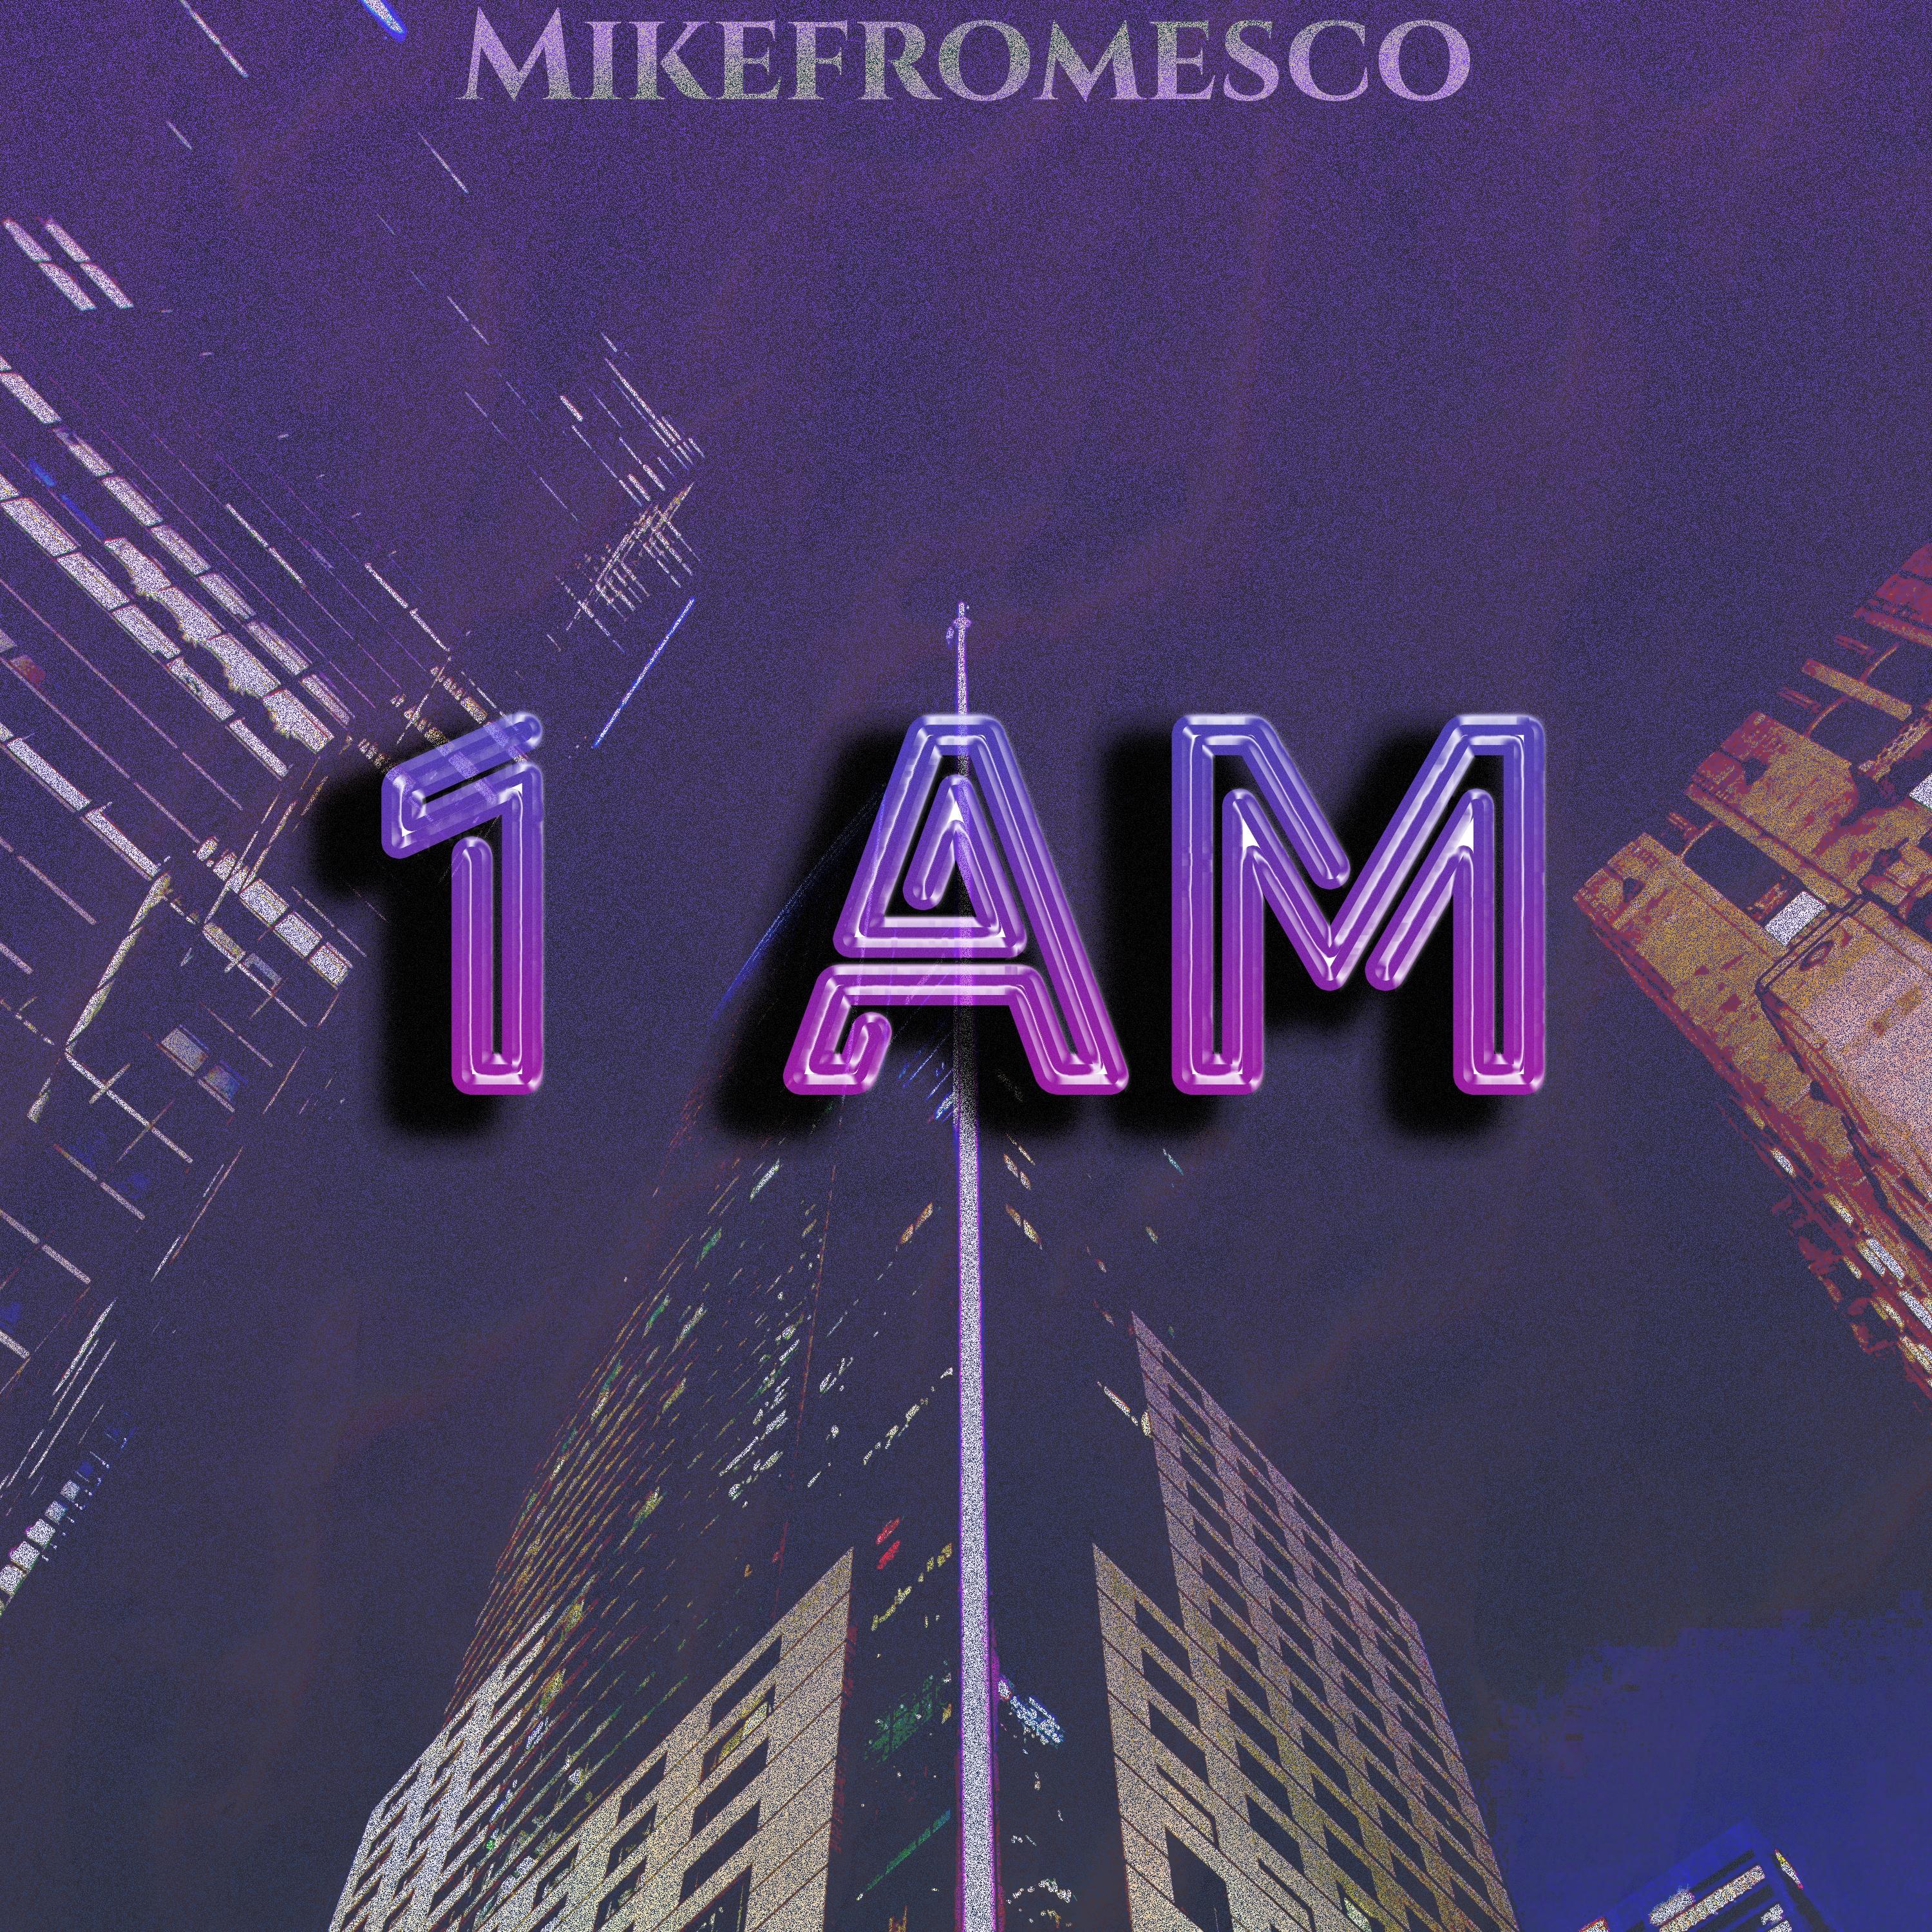 Mikefromesco - 1 AM